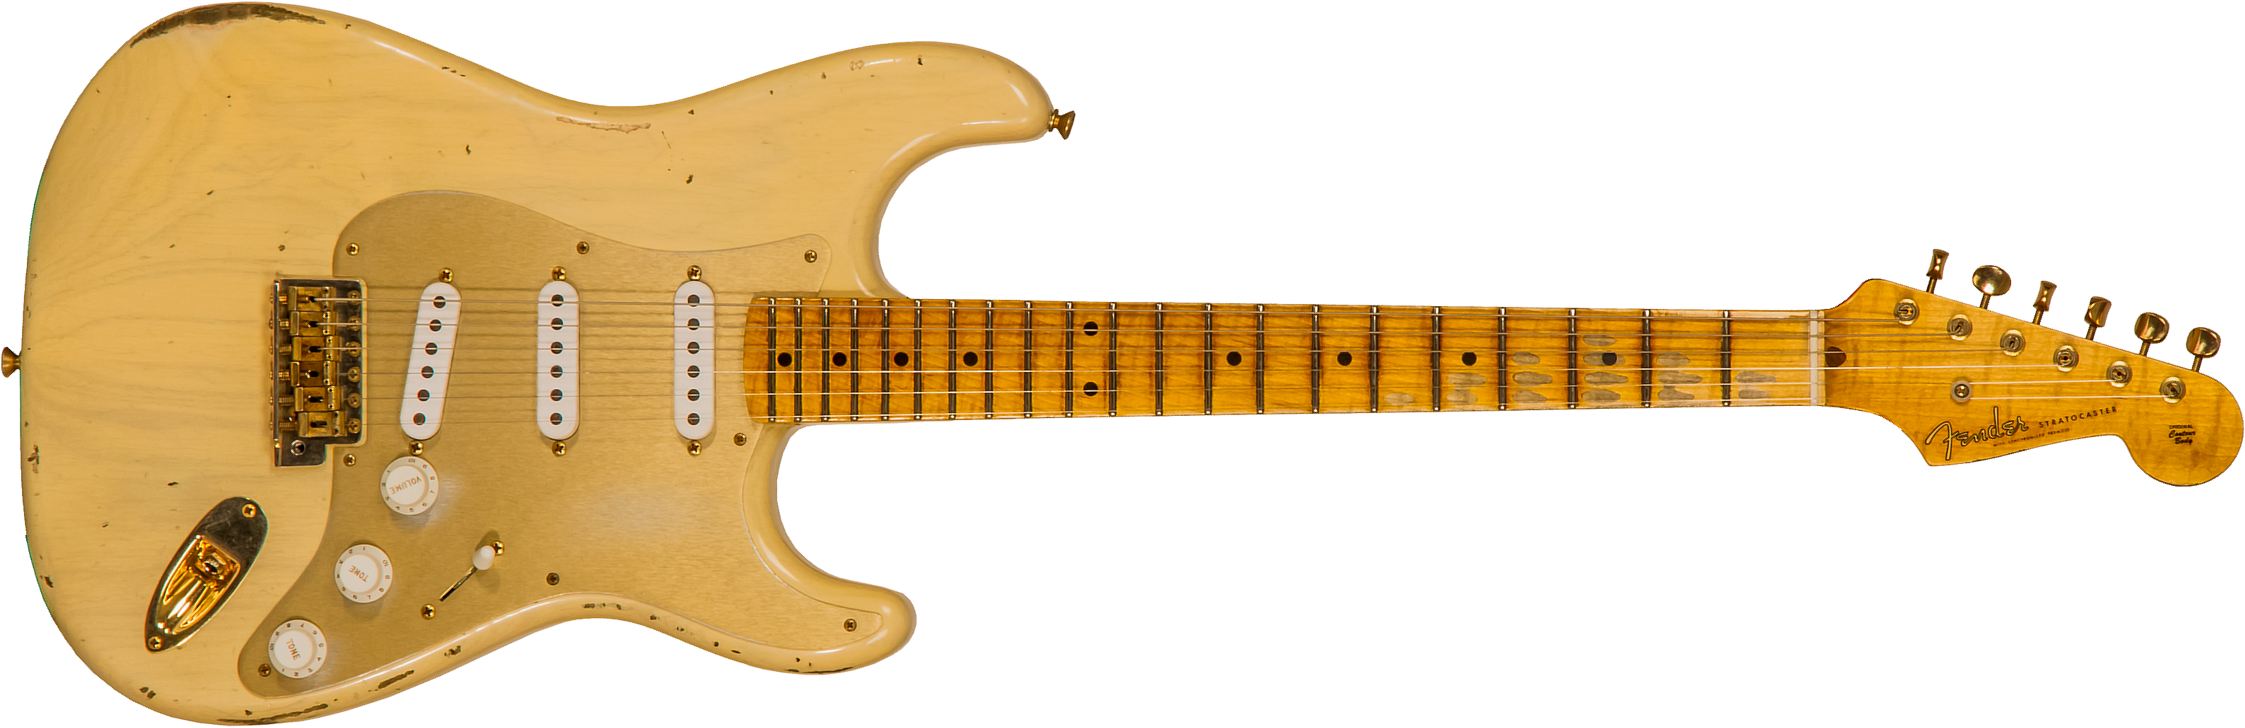 Fender Custom Shop Strat 1955 Bone Tone Usa 3s Trem Mn #cz554628 - Relic Honey Blonde W/ Gold Hardware - E-Gitarre in Str-Form - Main picture